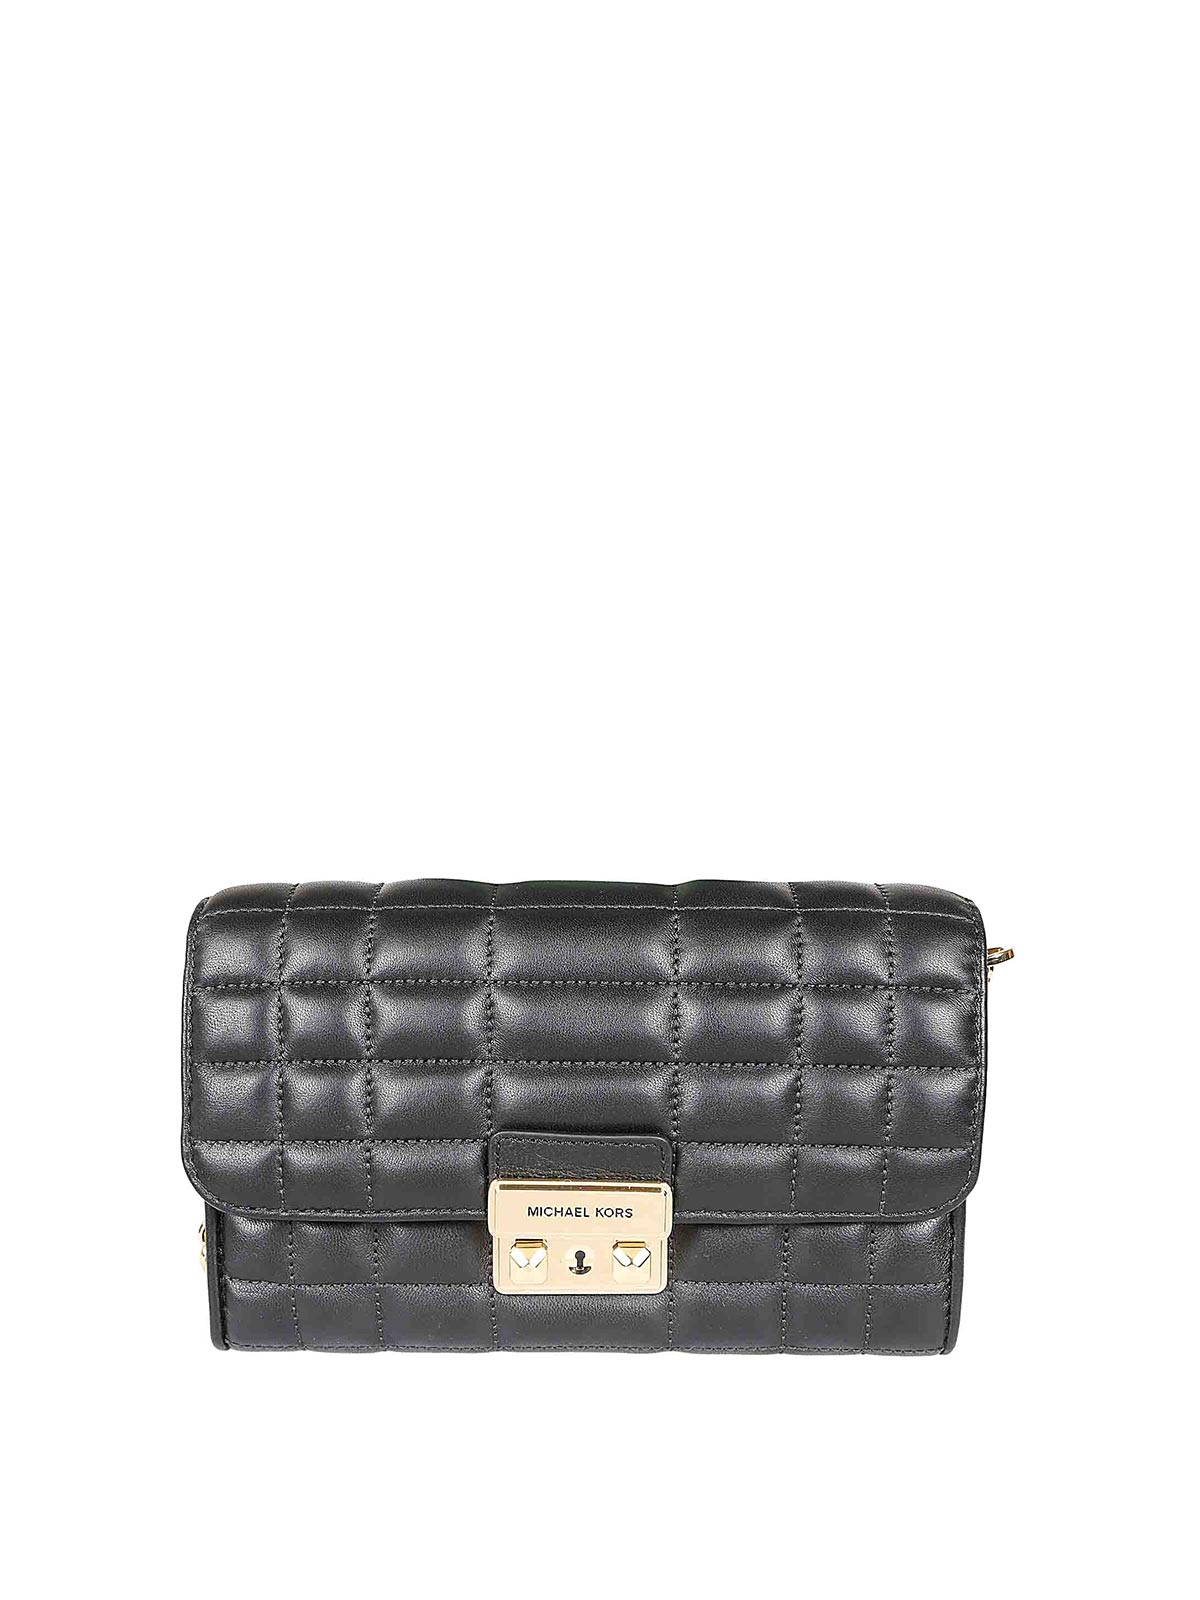 Michael Kors Tribeca Leather Bag In Black